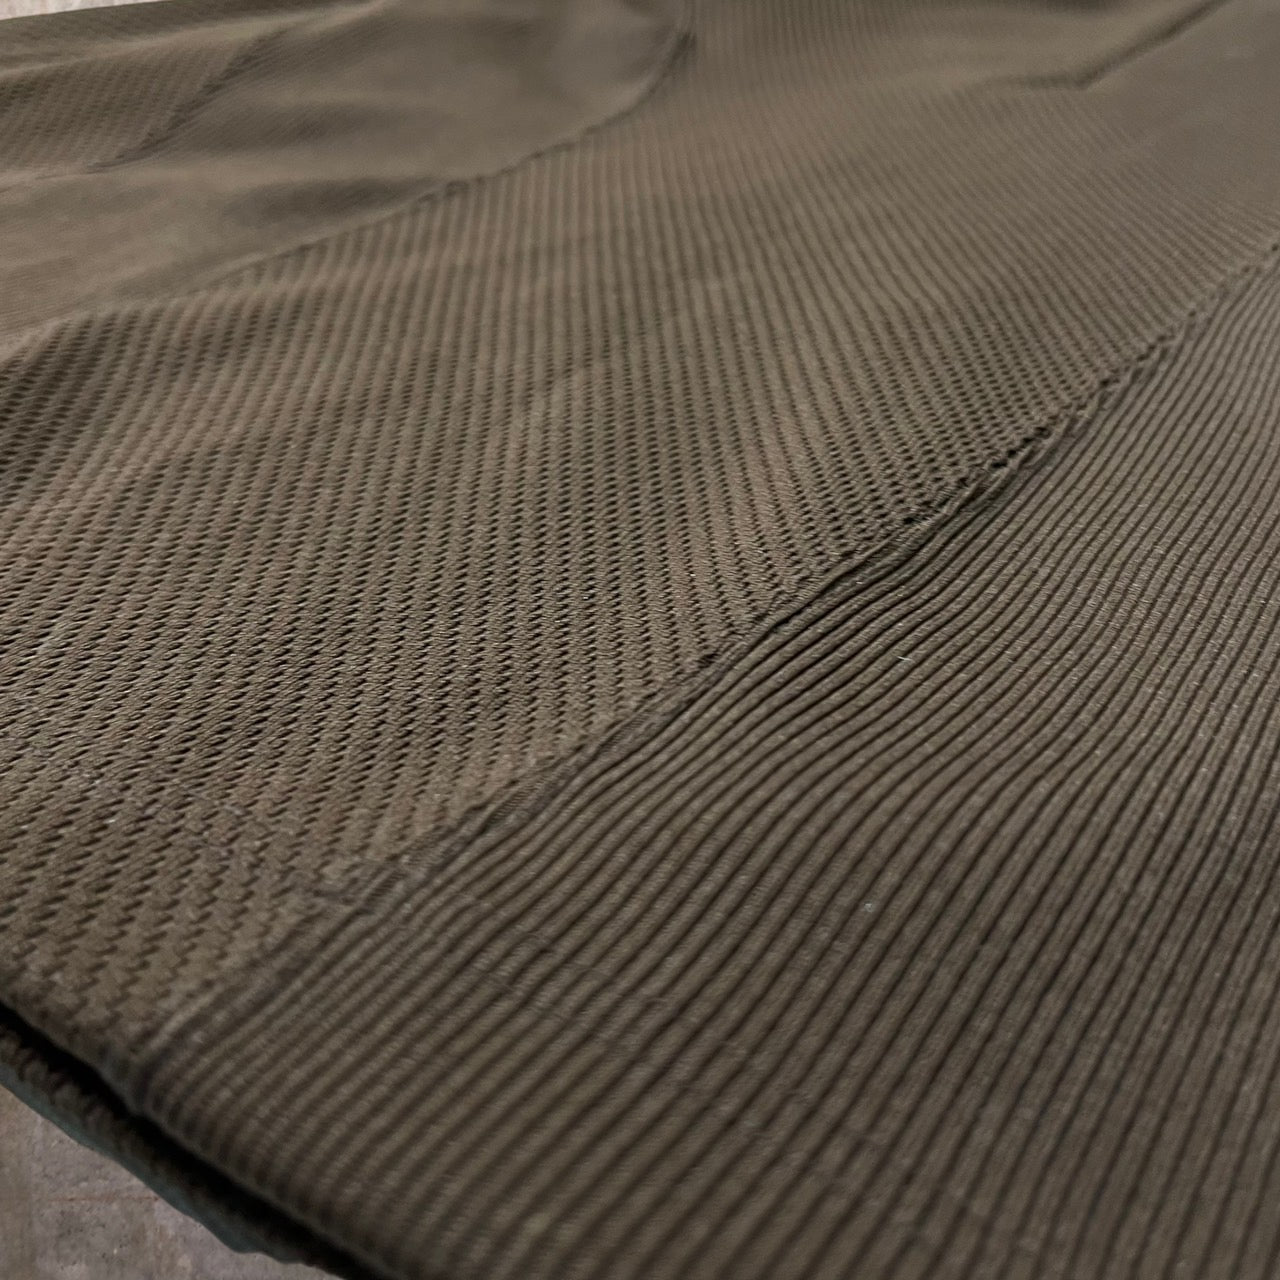 COMME des GARCONS HOMME PLUS(コムデギャルソンオムプリュス) 03AW half zip mesh pullover shirt/ハーフジッププルオーバー/カットソー 表記消え(S~M程度) ブラウン 03AWカーブ期